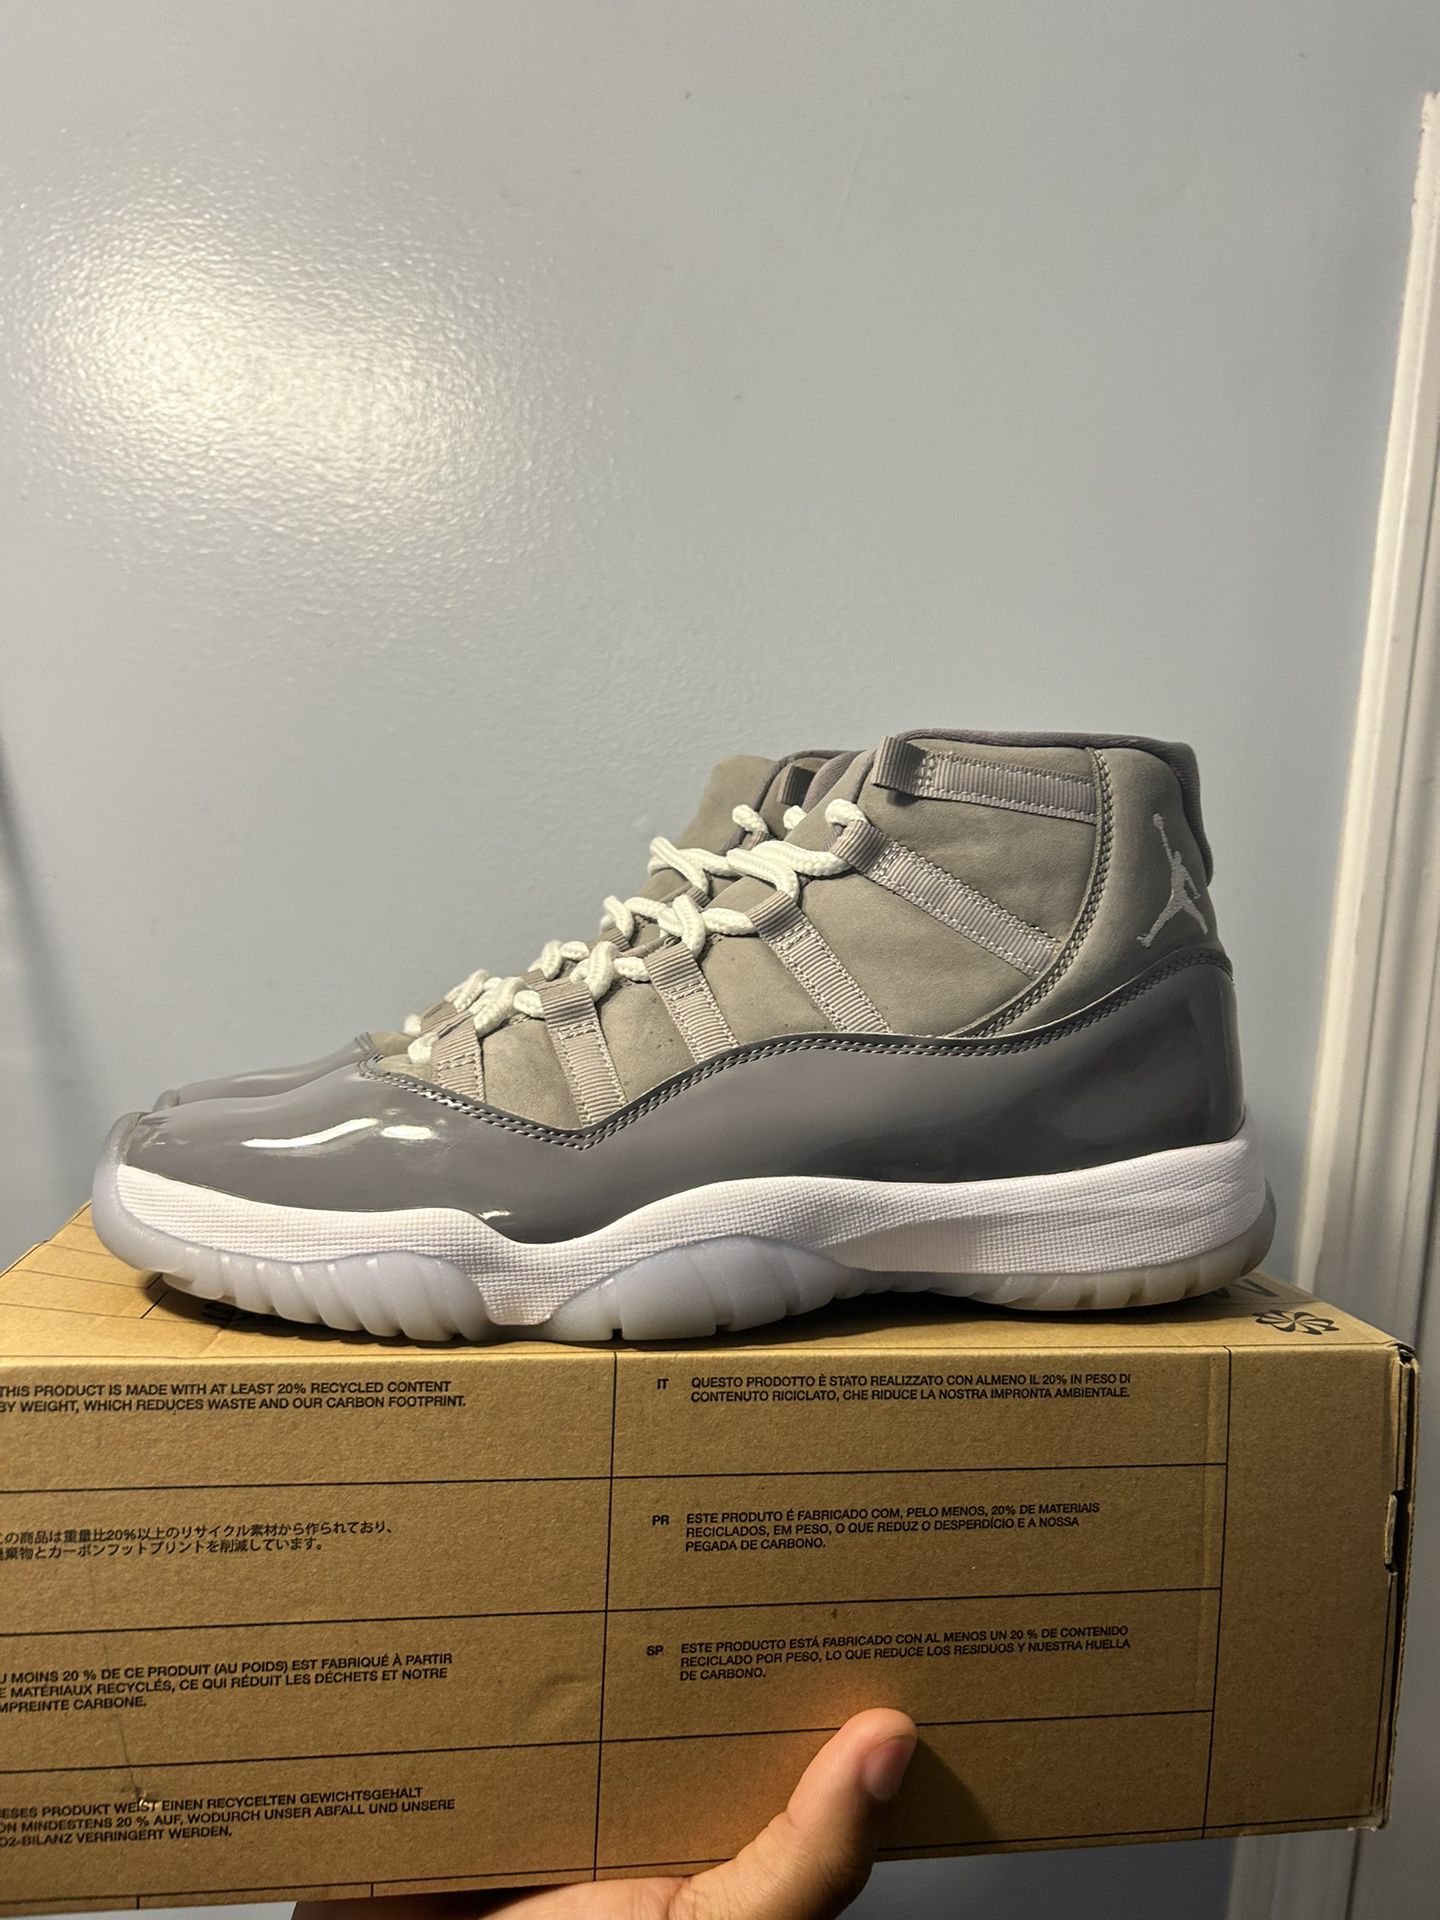 Jordan 11 Cool Grey 2021 Size 10.5 